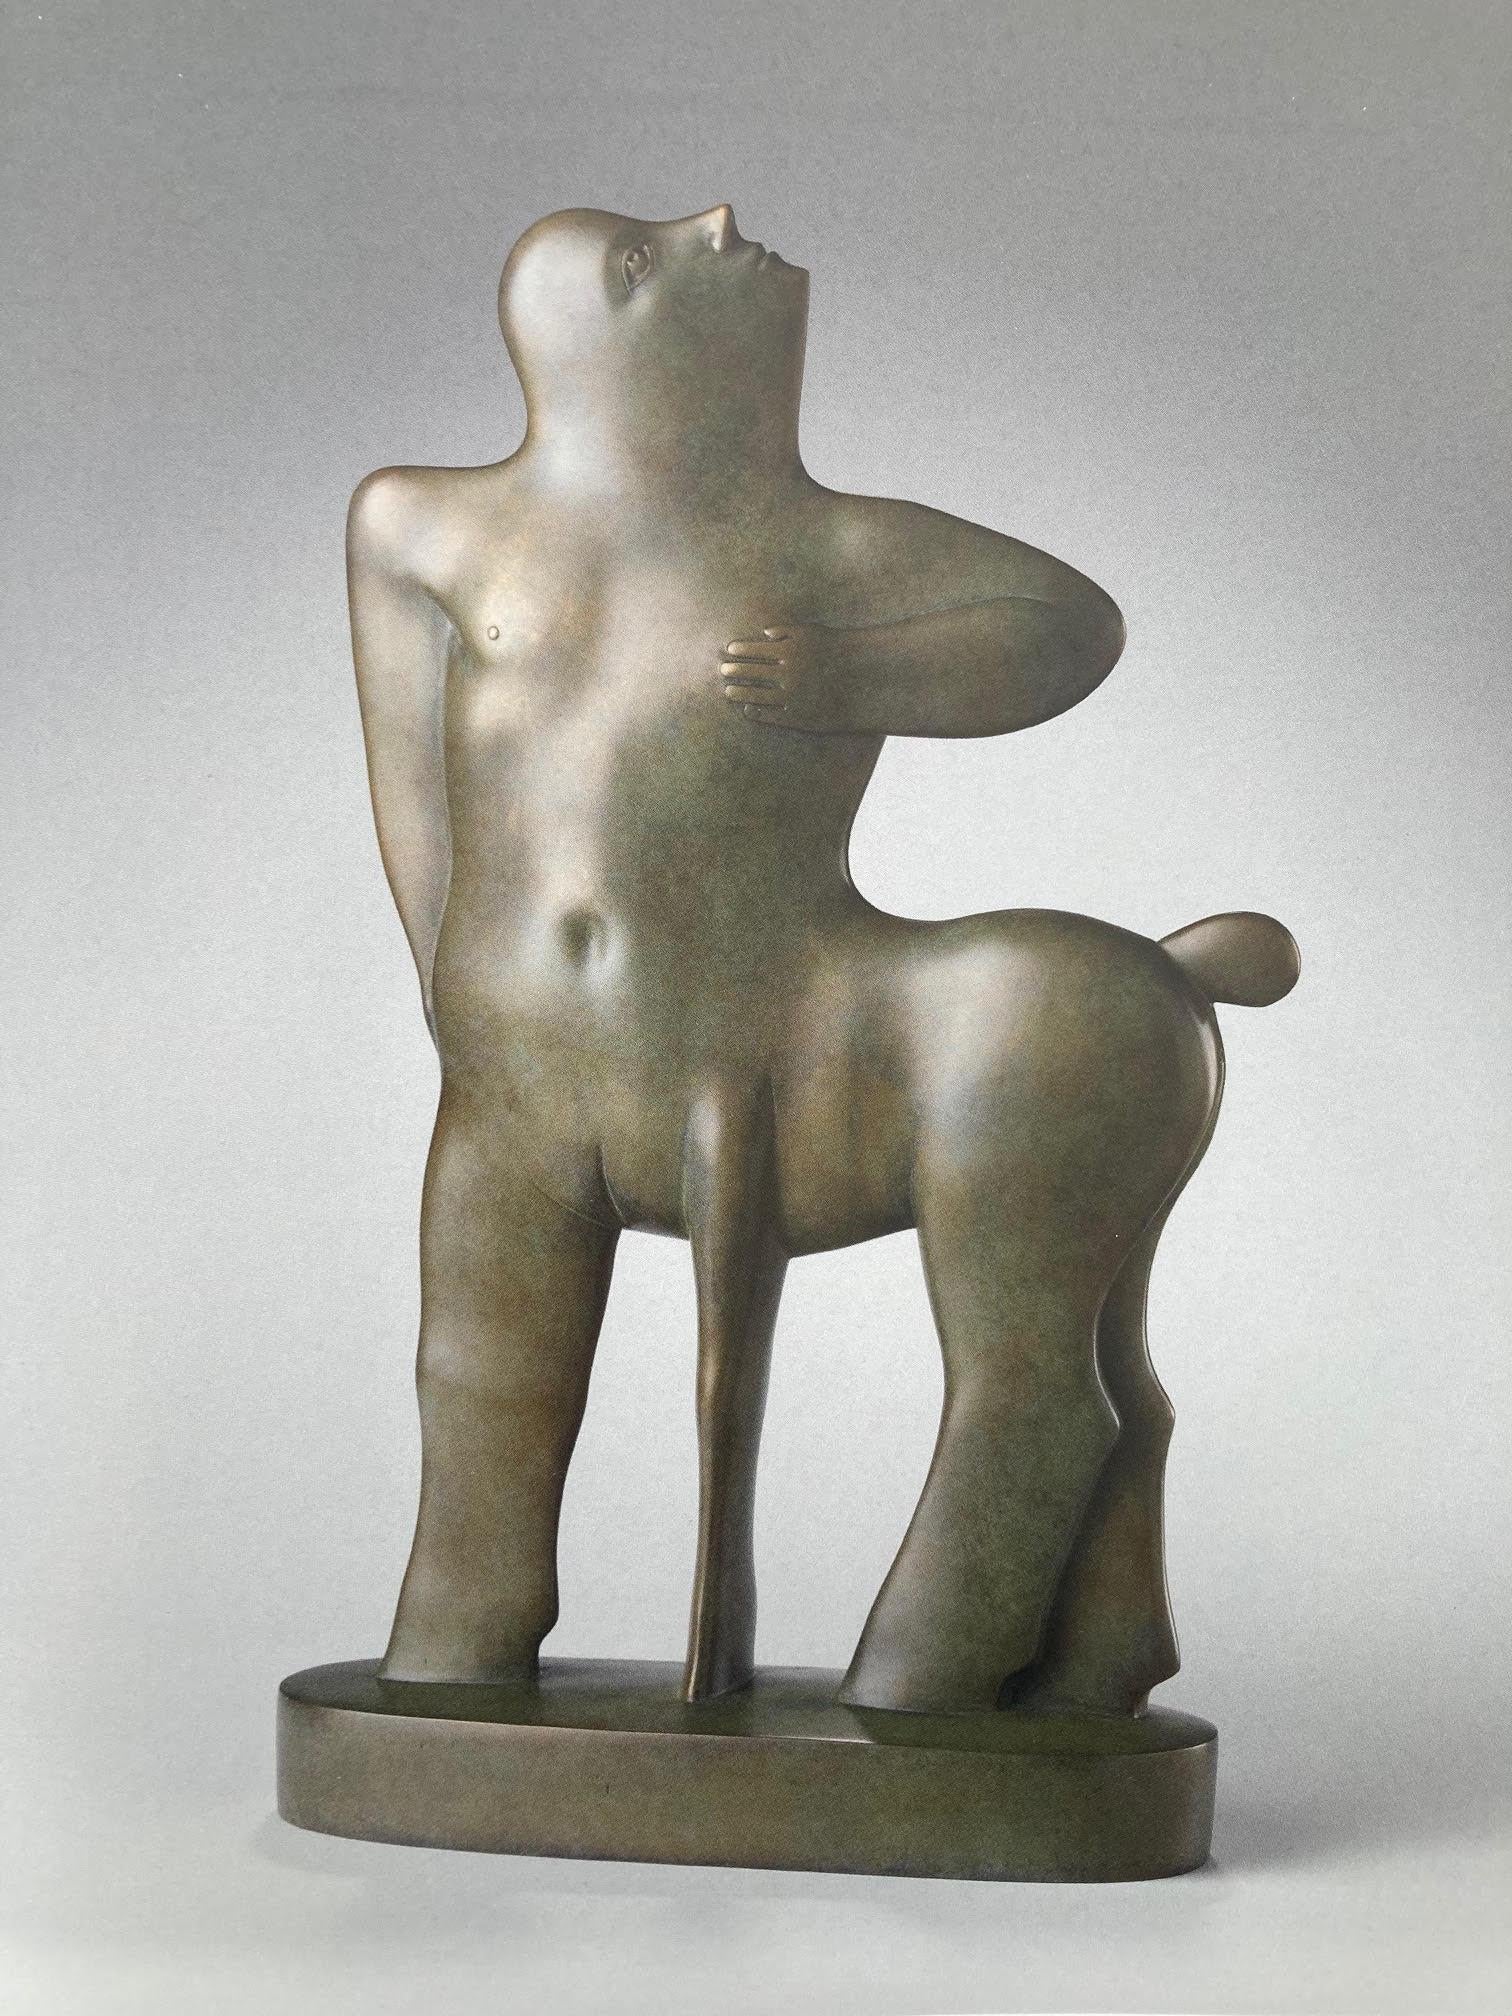 KOBE Figurative Sculpture - Centauro Bronze Sculpture Man Horse Mythology Portrait Animal Contemporary